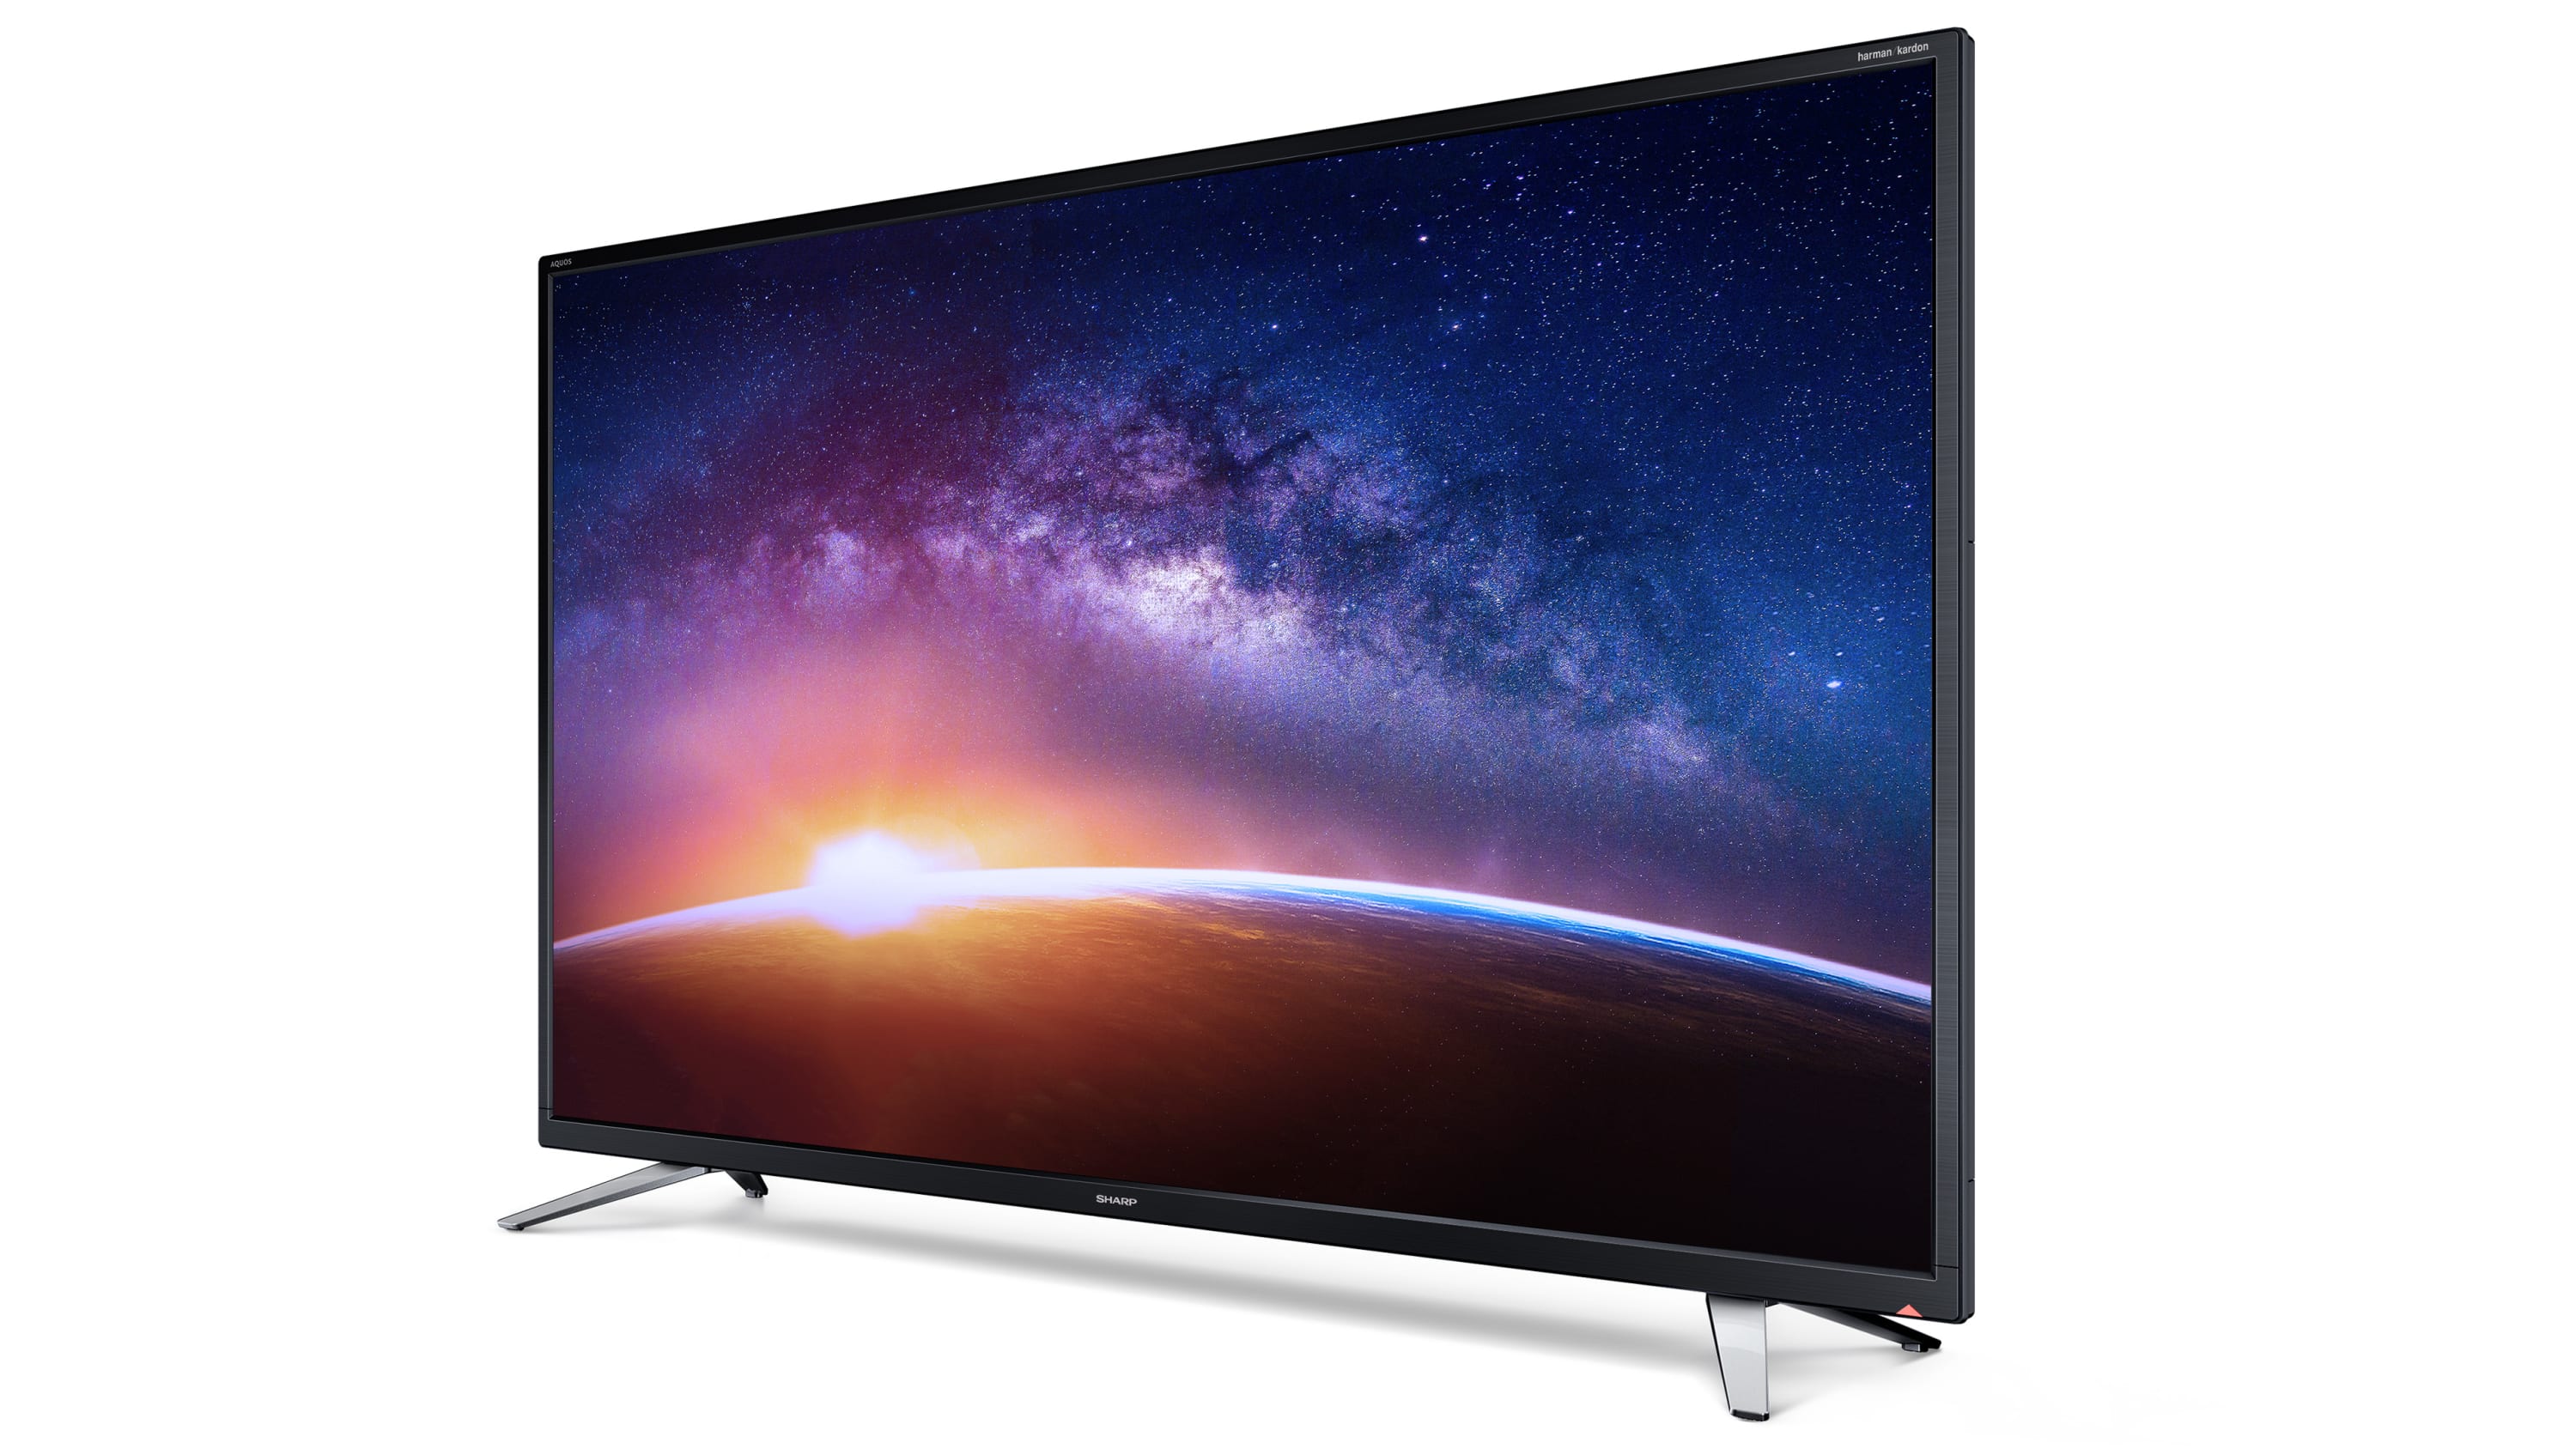 Smart-TV, HD/Full HD - 42" FULL HD SMART